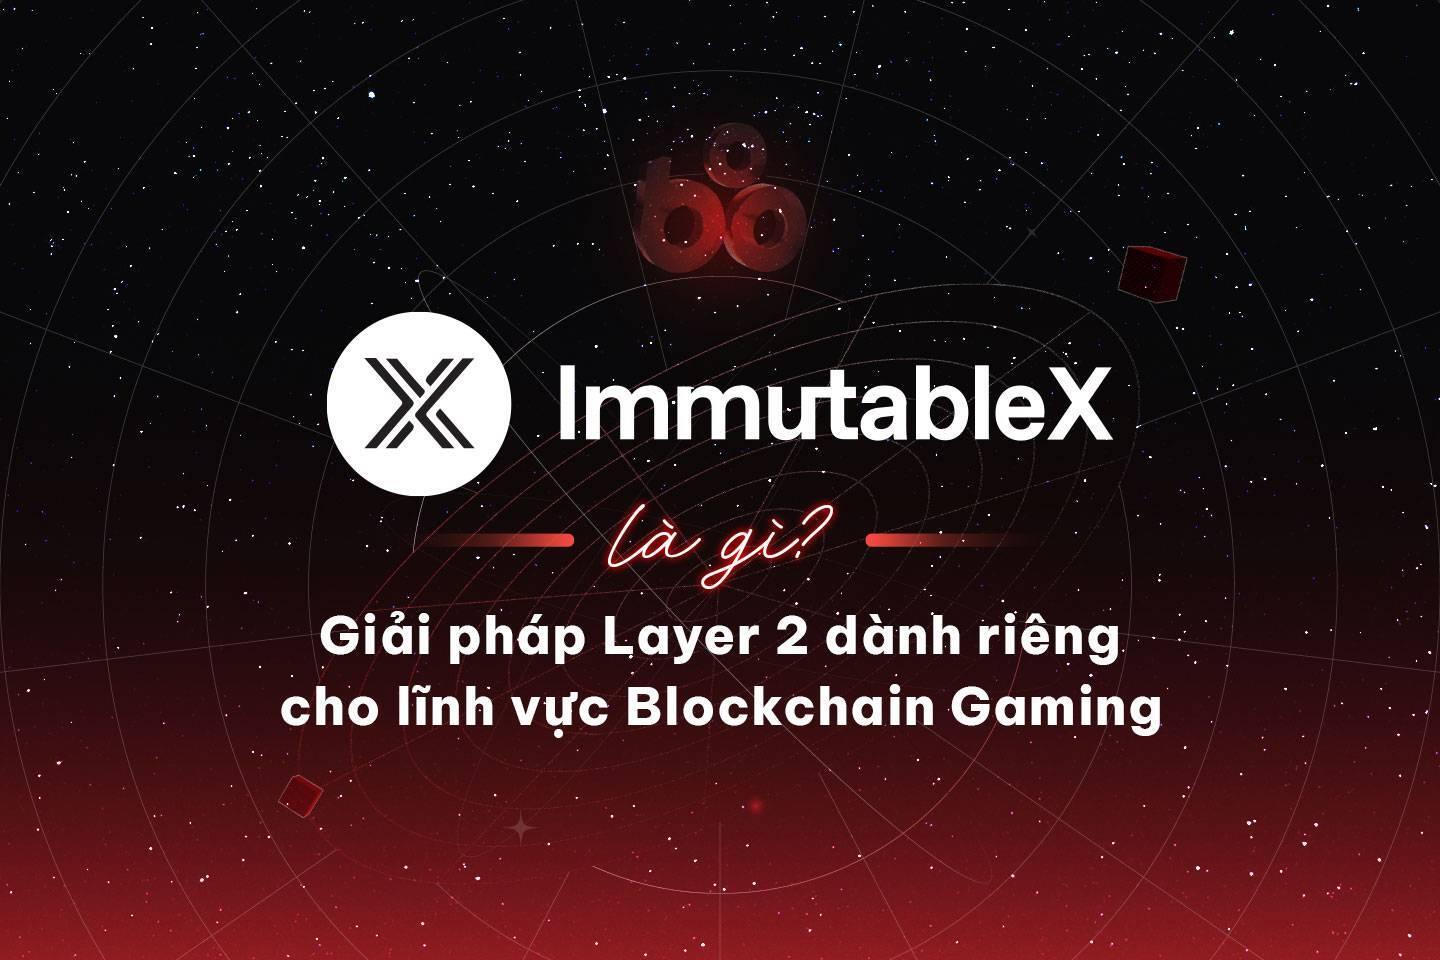 immutable-x-imx-la-gi-giai-phap-layer-2-danh-rieng-cho-linh-vuc-blockchain-gaming